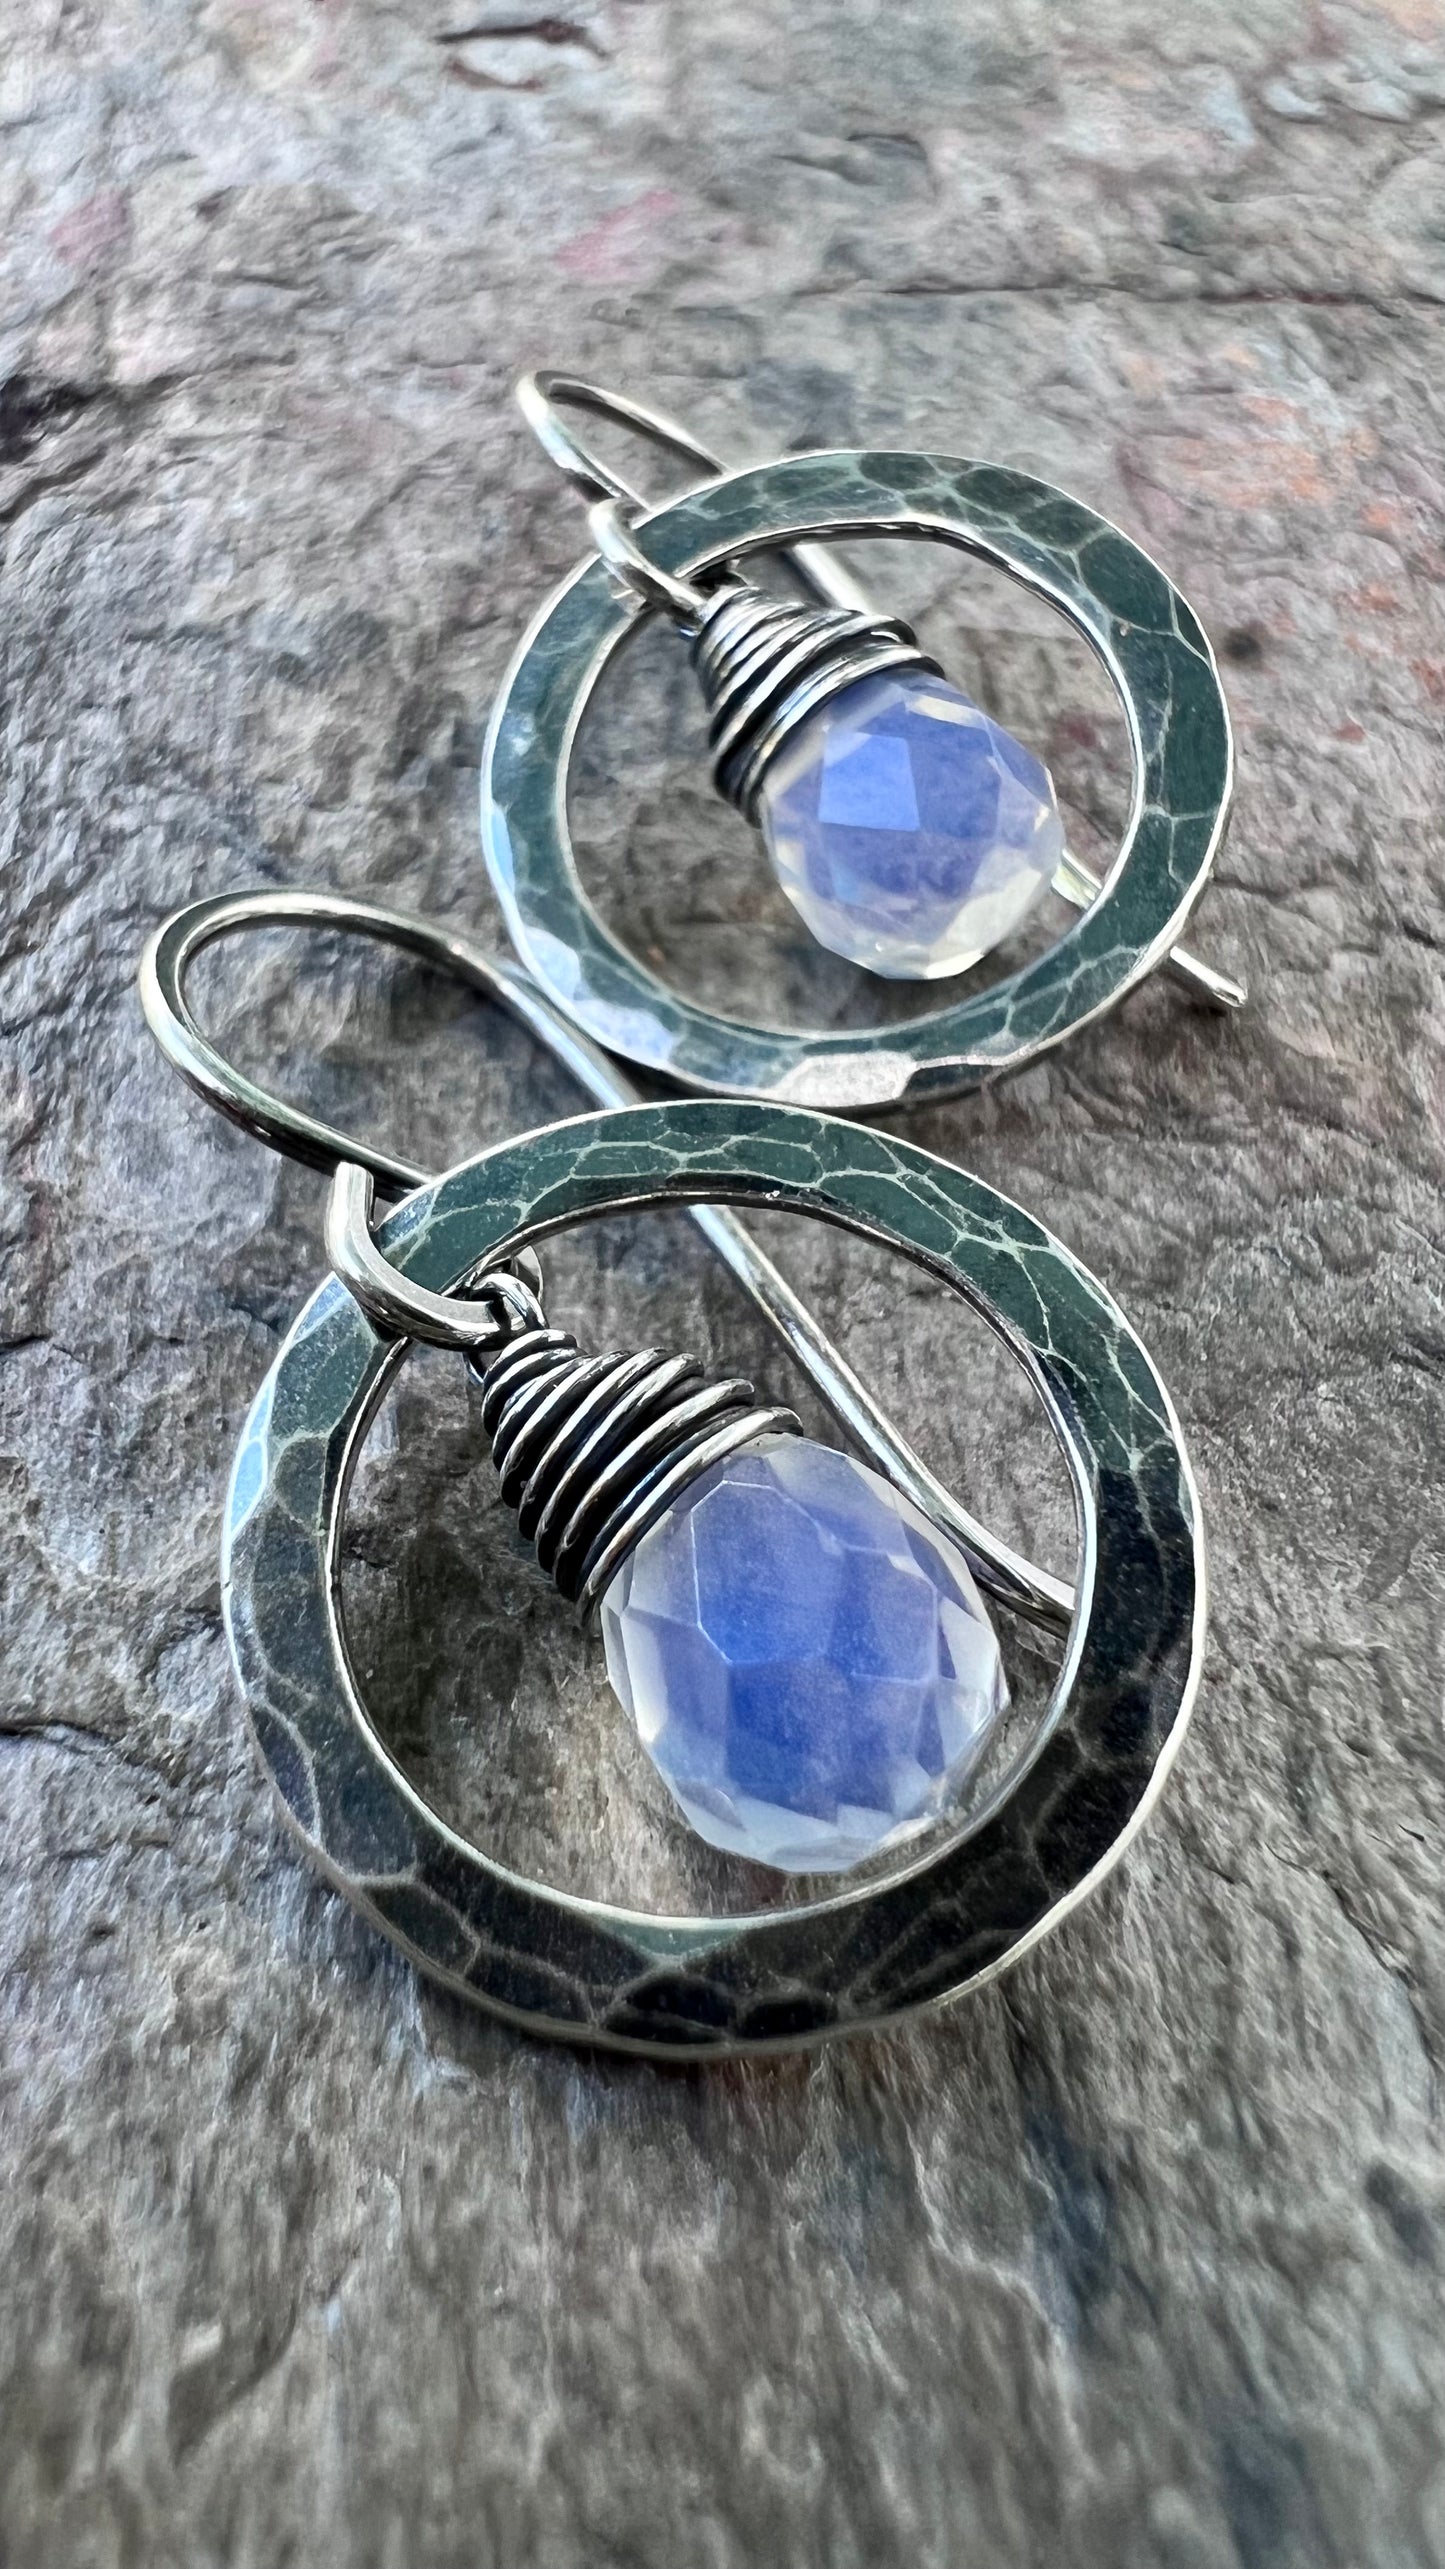 Opalite Sterling Silver Earrings - Faceted Opalite Teardrops in Hammered Circles on Handmade Sterling Silver Earwires